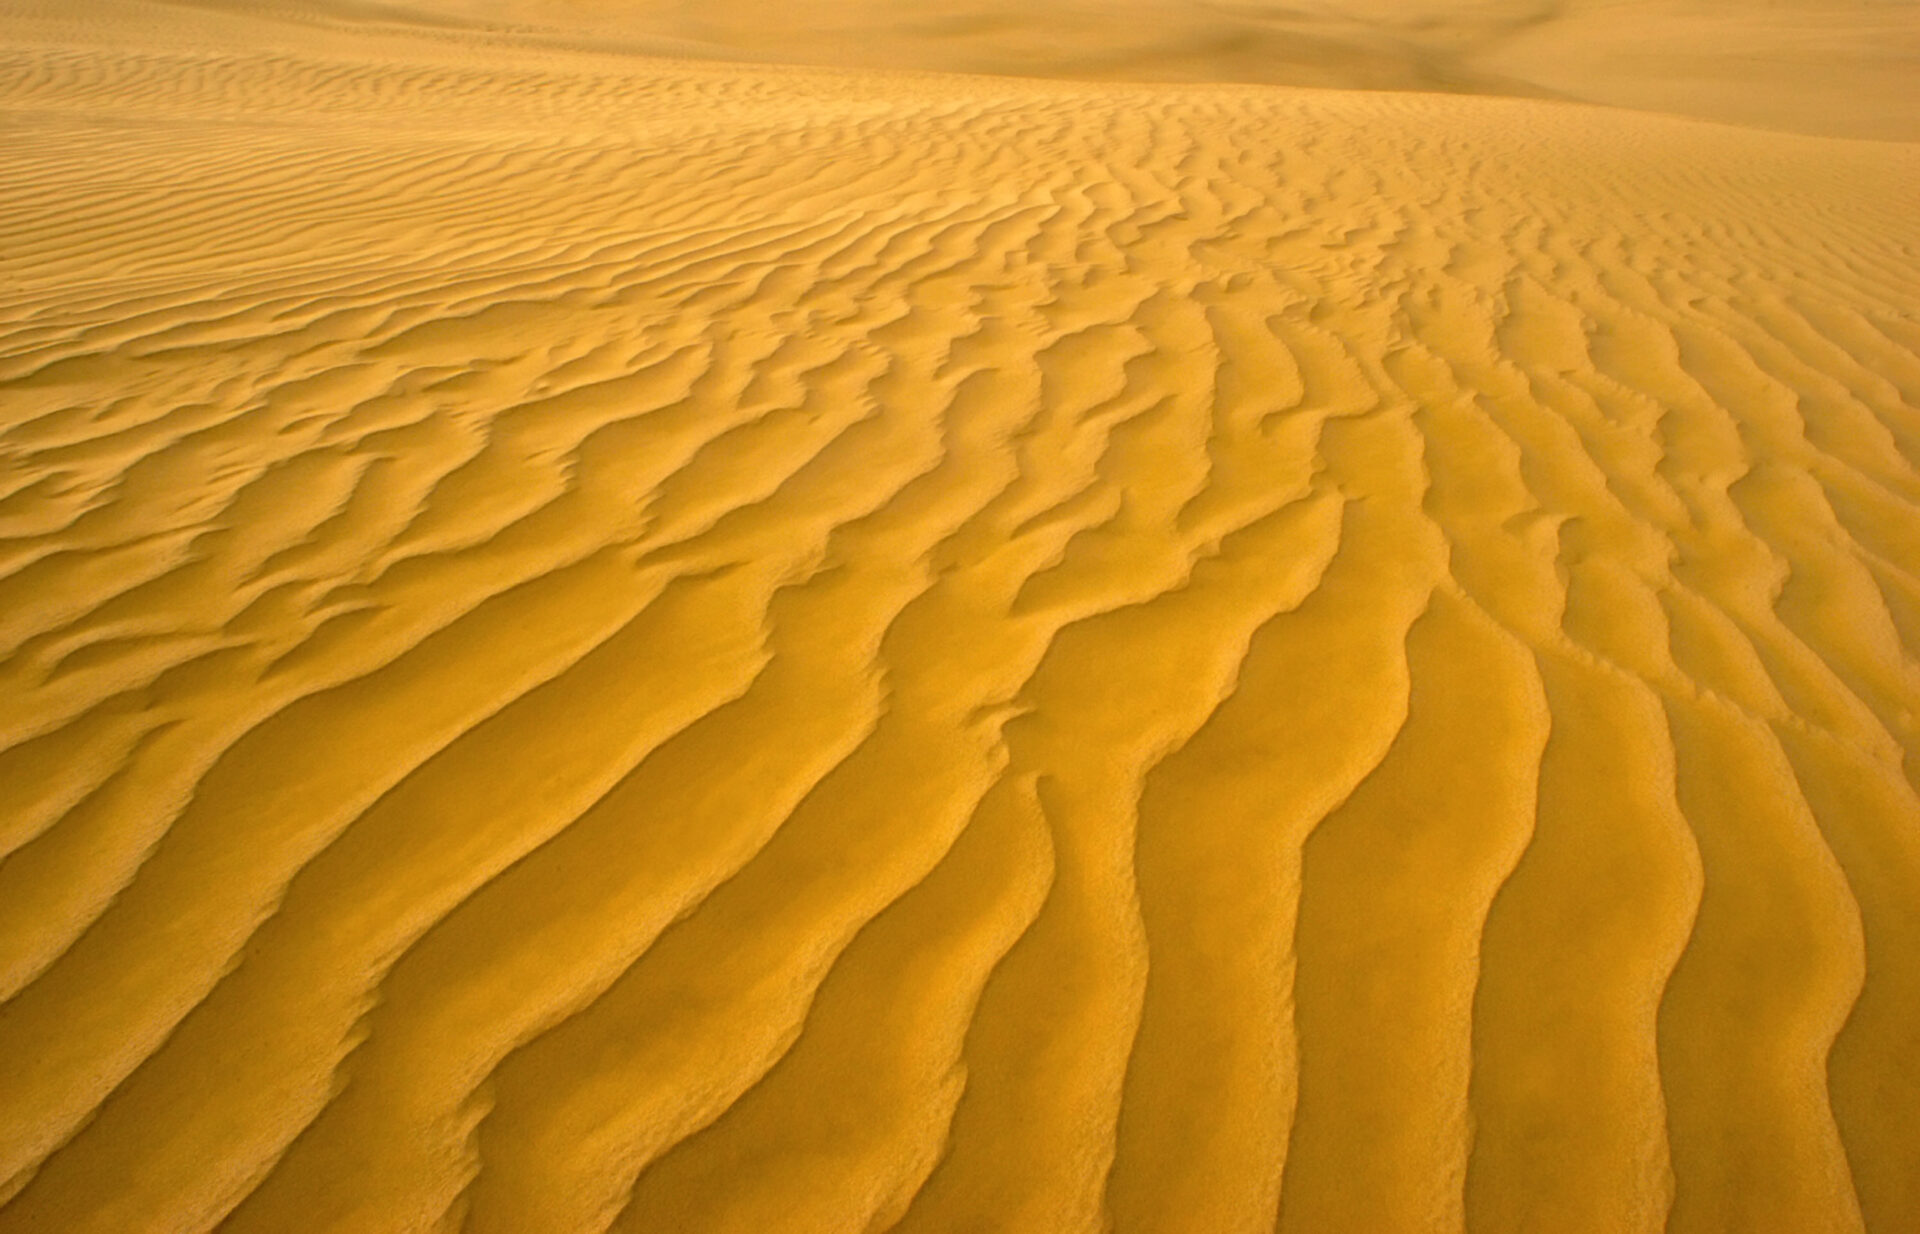 Sand dunes arid landscape